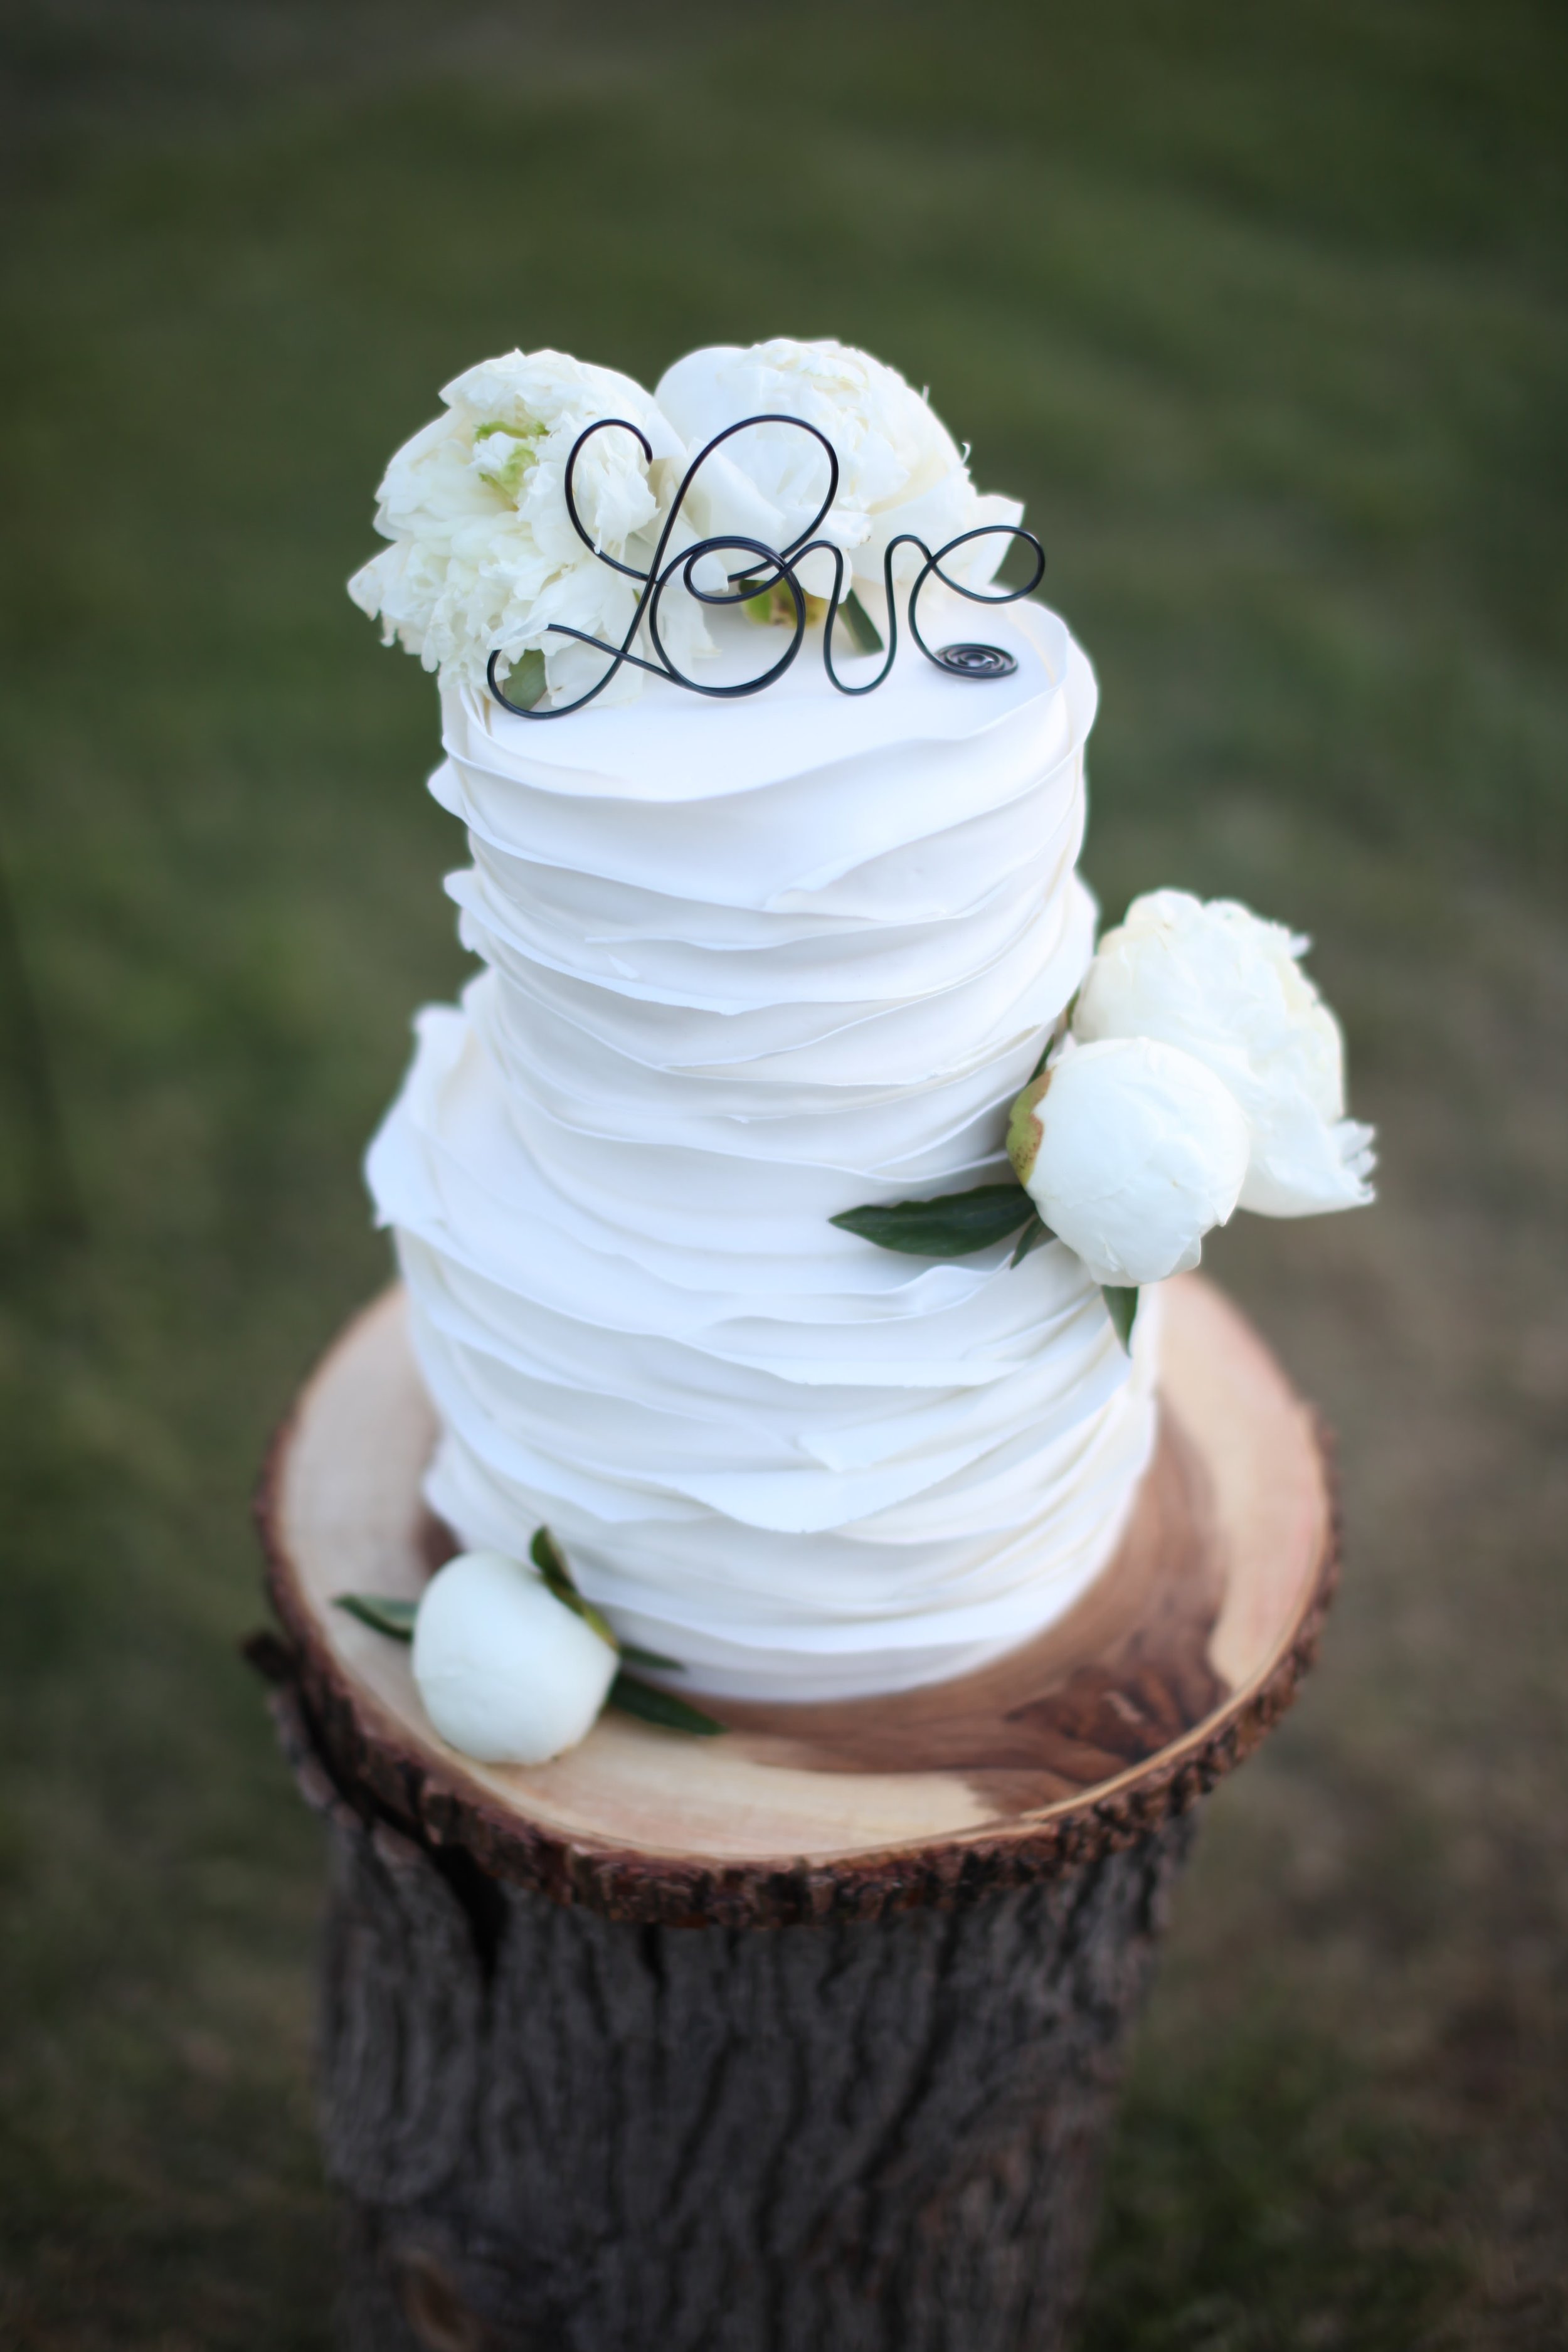 Creative Wedding and Anniversary Cakes